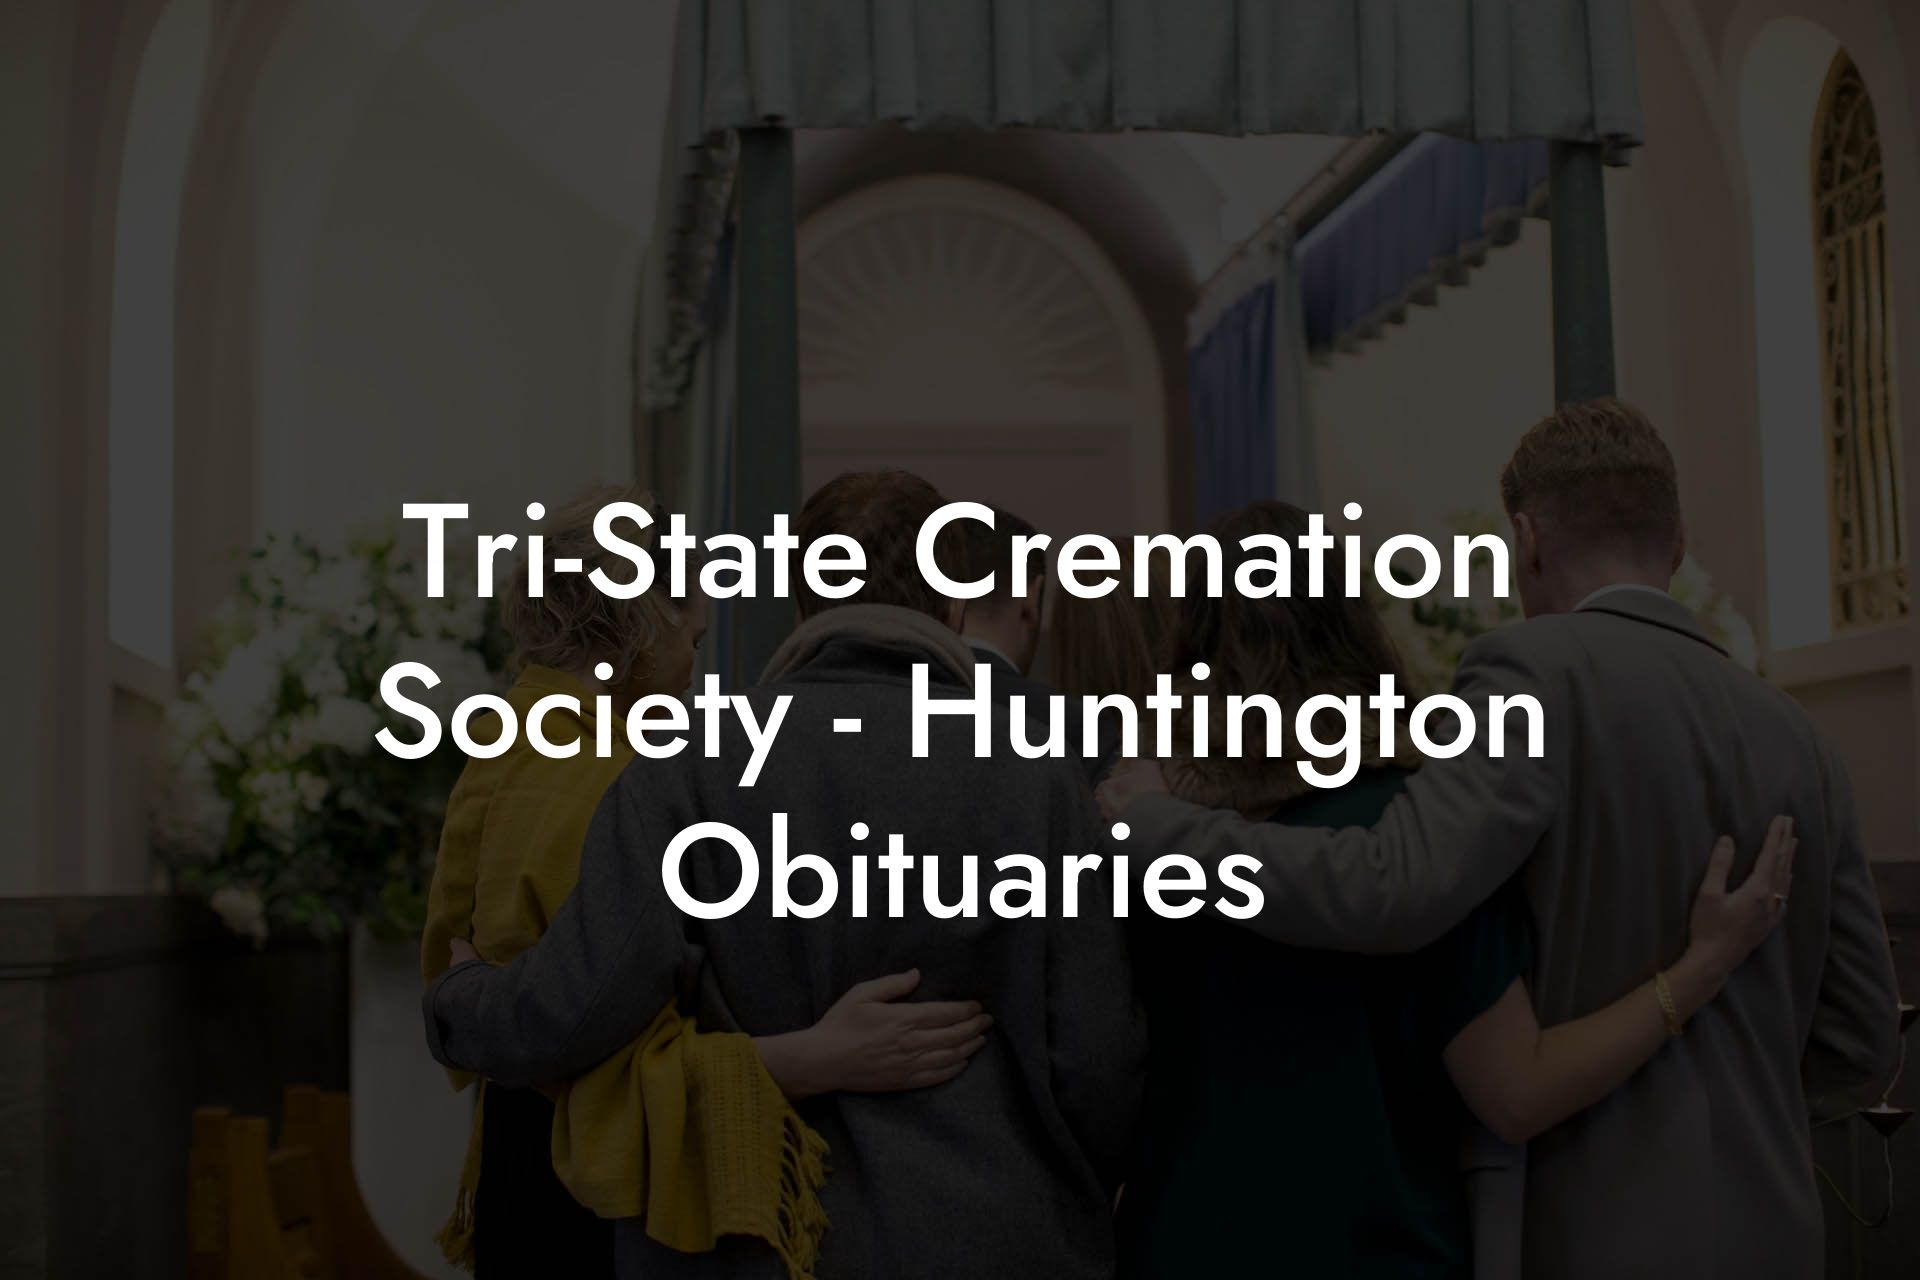 Tri-State Cremation Society - Huntington Obituaries